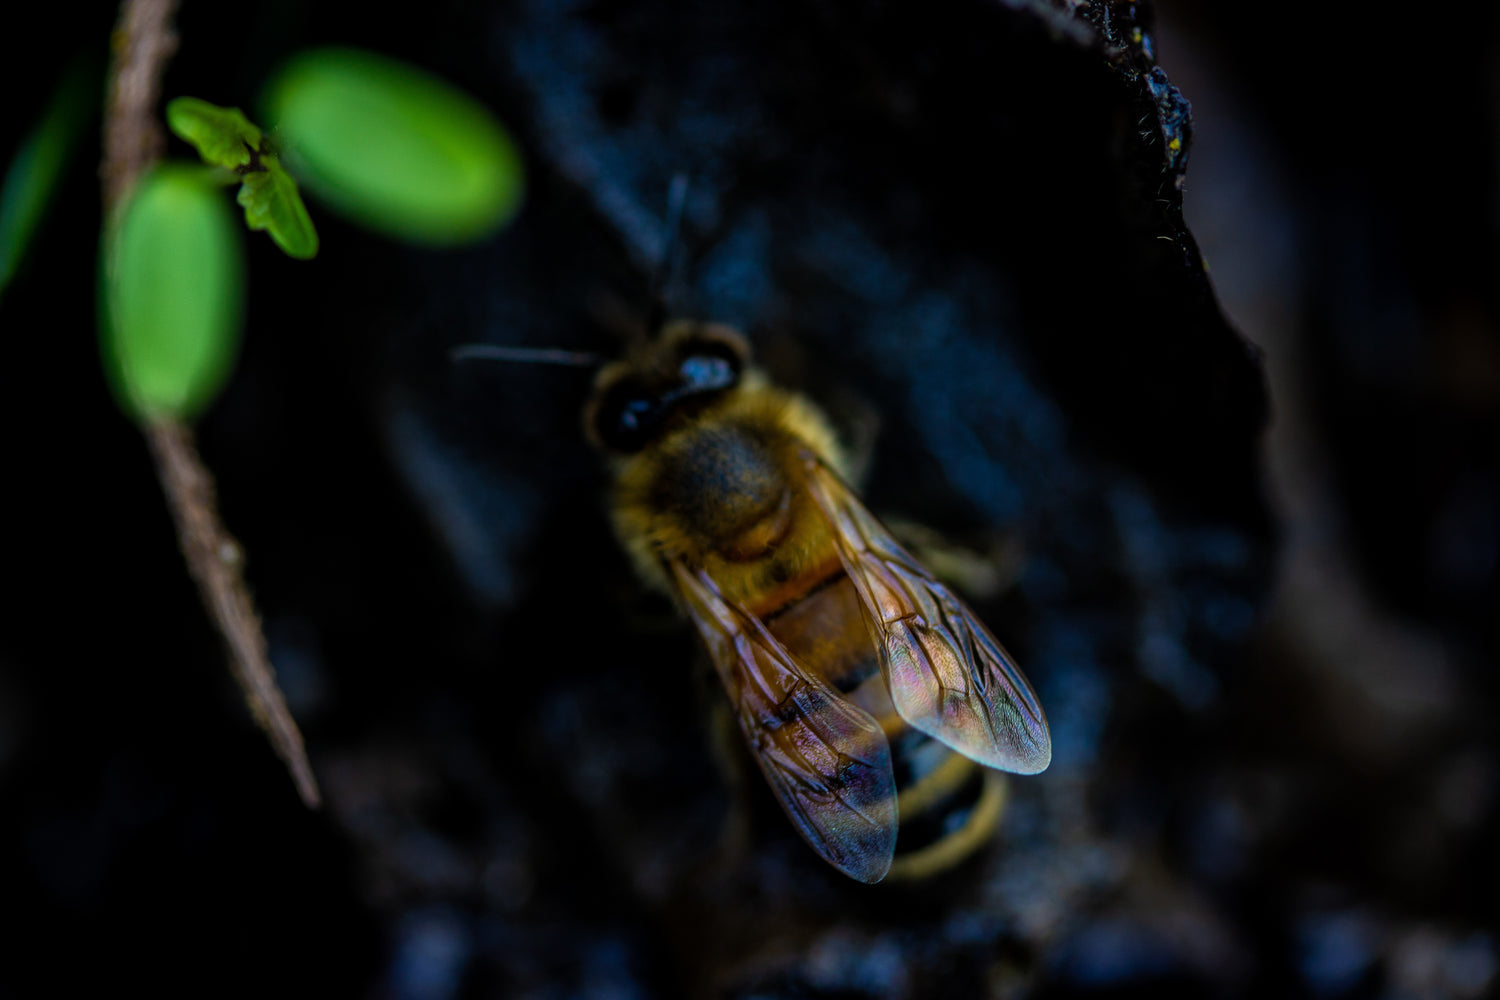 1 Freshly Dried Real USA Honeybee Natural Honeycomb + 12 Free Bees